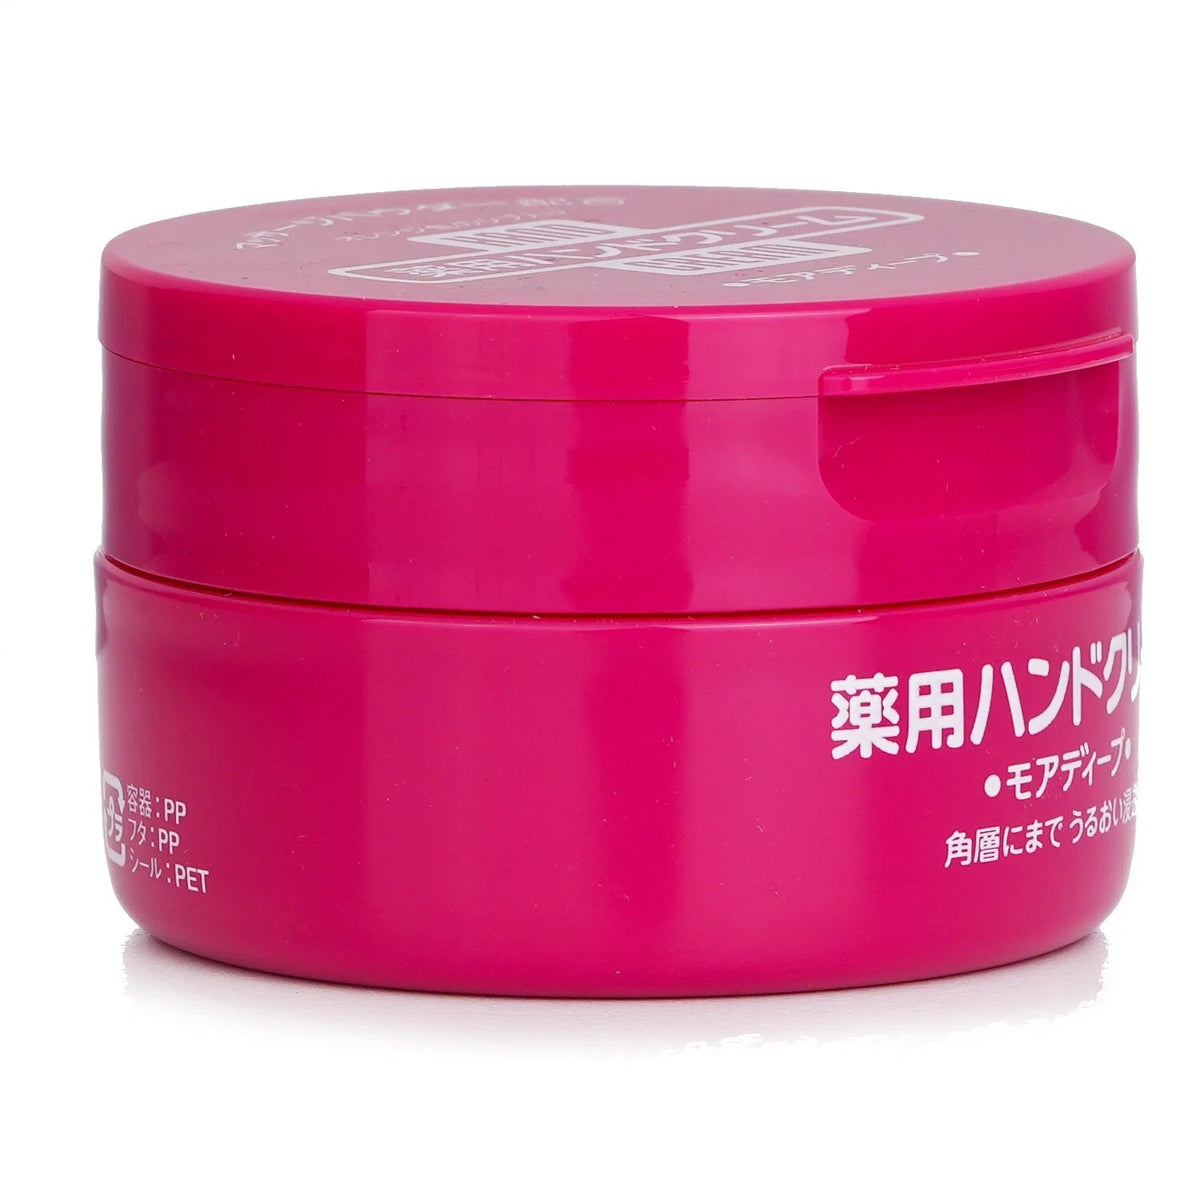 Moist Hand Cream Jar 100g - Shiseido | Kiokii and...